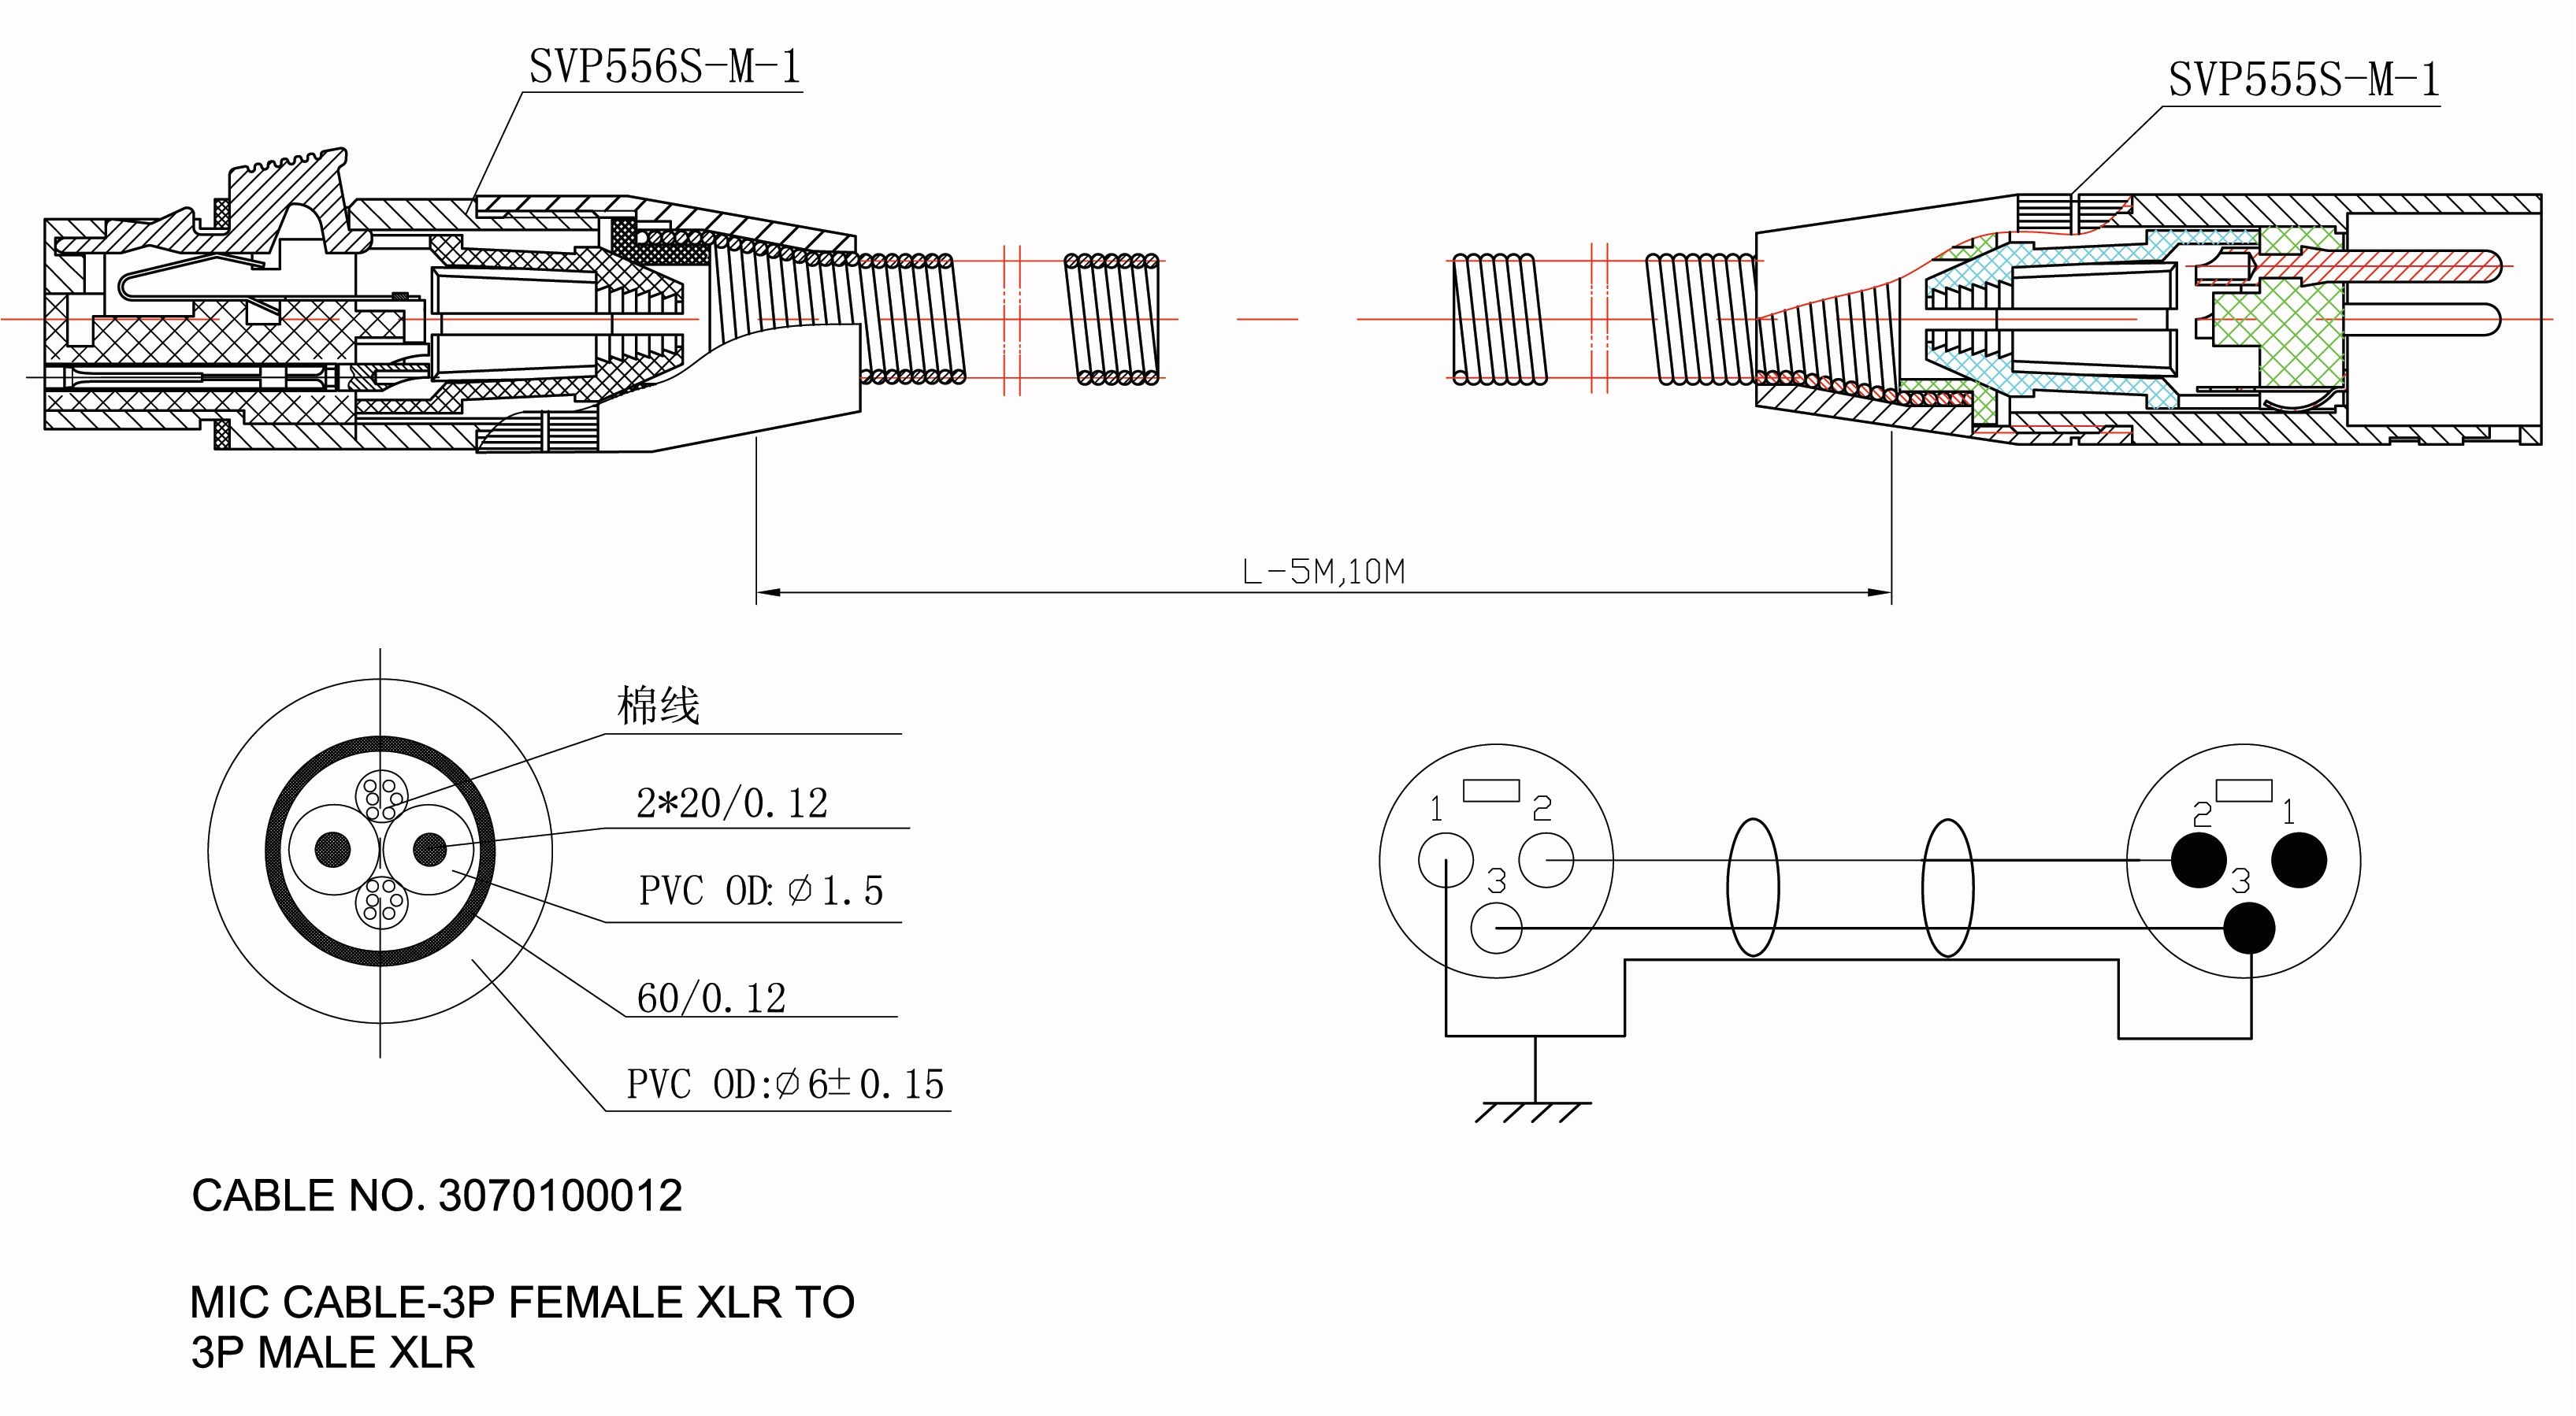 2 4 engine diagram for pvc wiring diagram paper 2 4 engine diagram for pvc